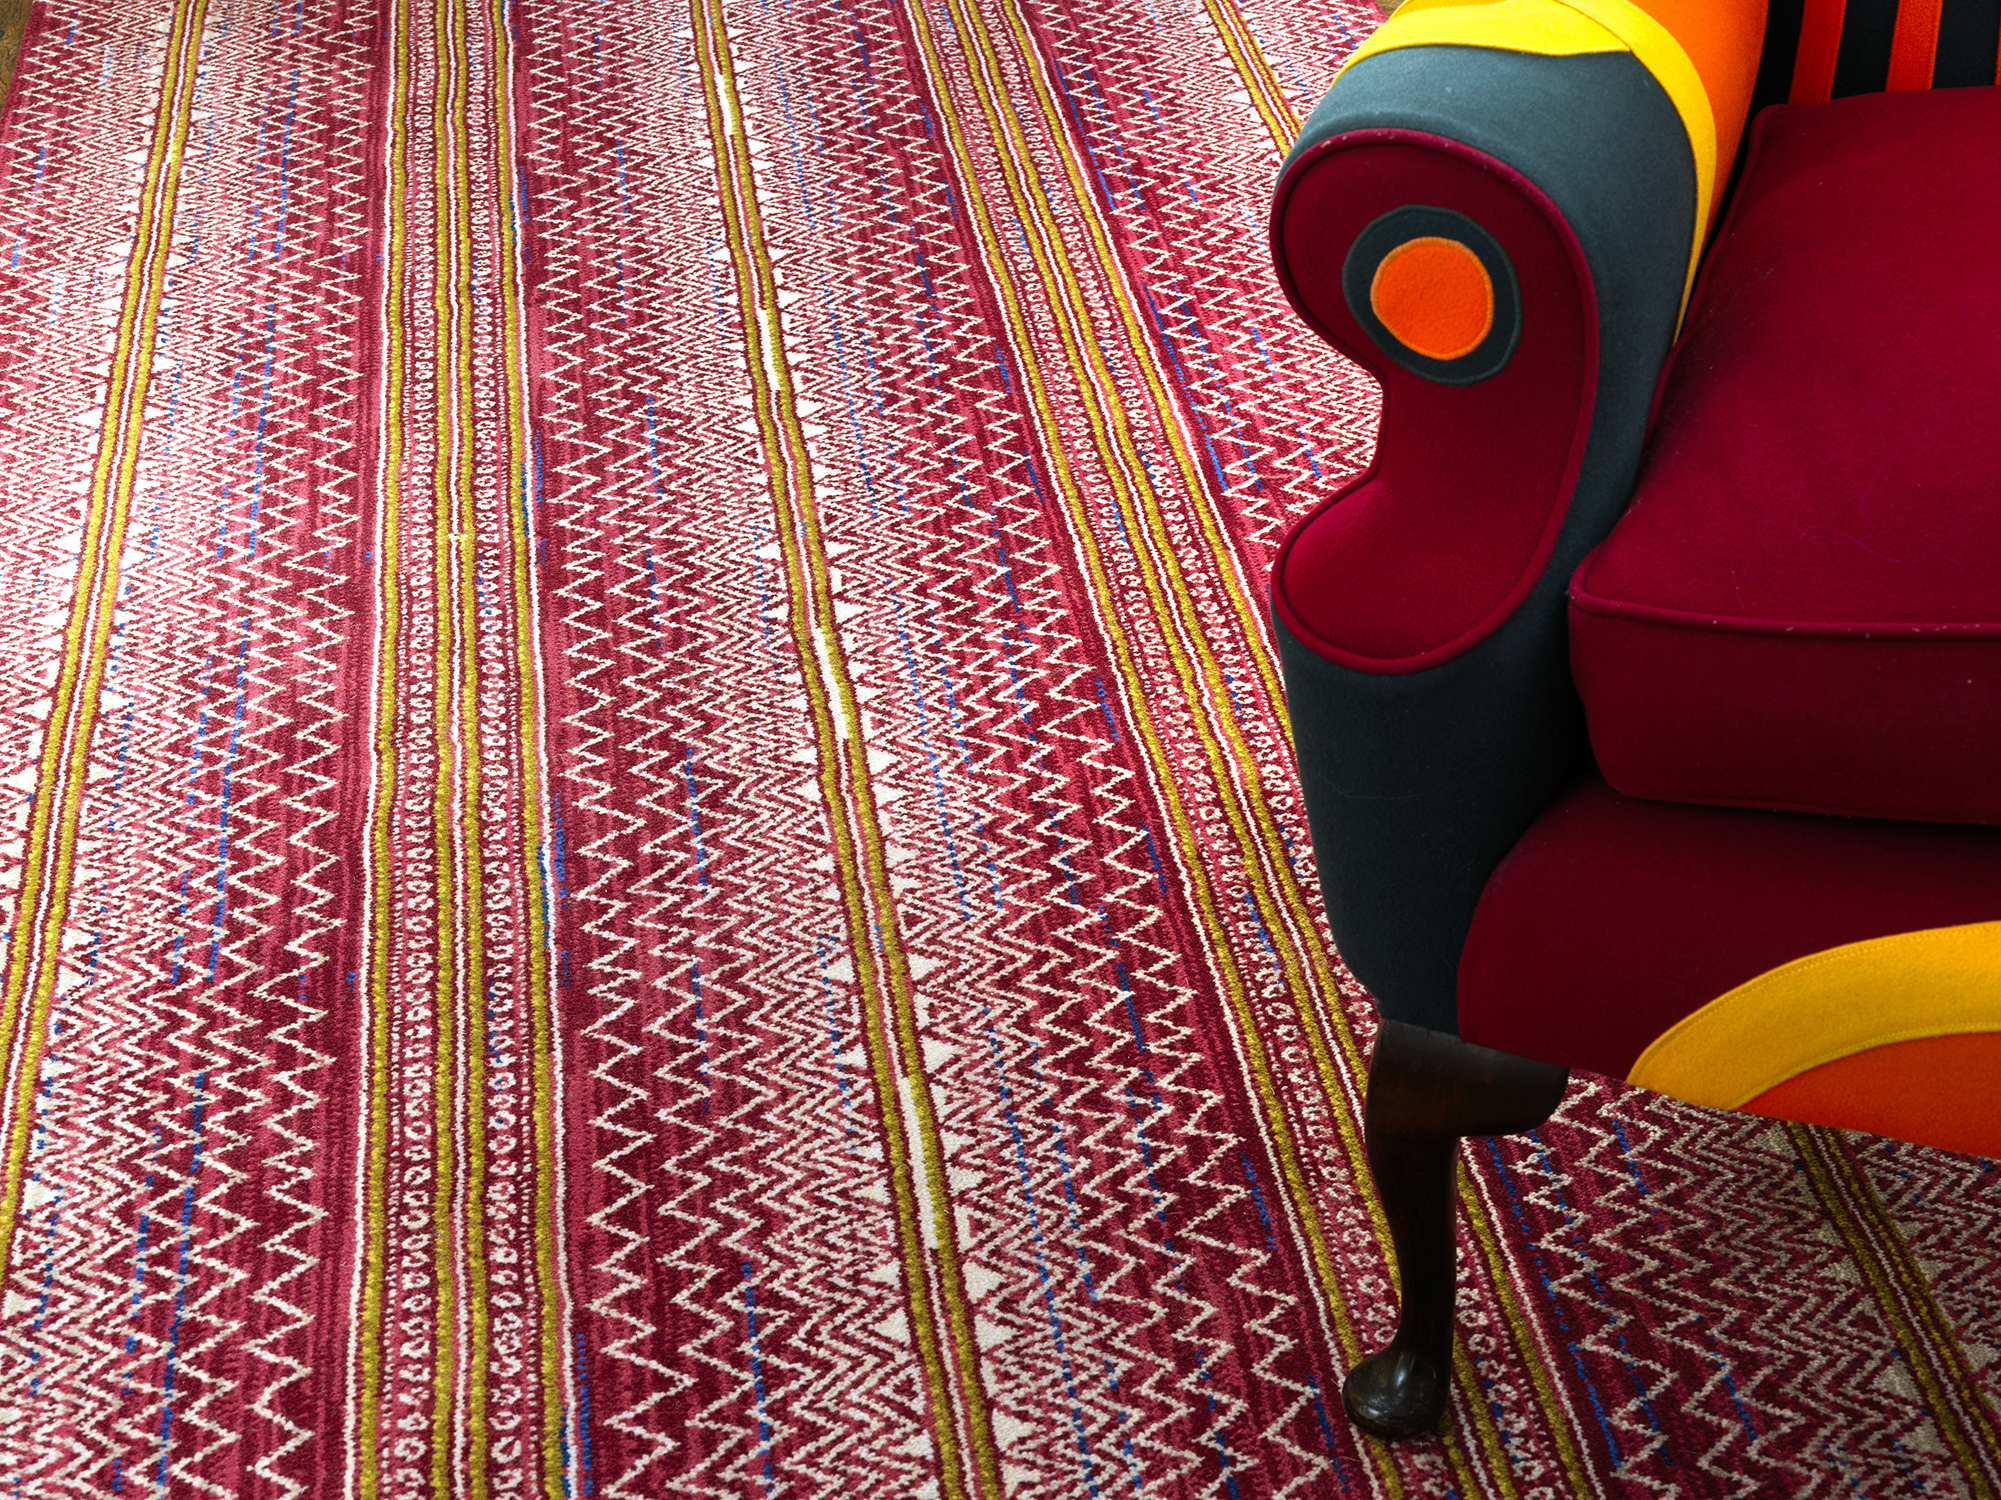 Kit Kemp By Wilton Carpets Batik Cherry ?a=1&anchor=center&mode=crop&width=1596&height=1088&bgcolor=fff&sig=2491ab2ab237c0021a1dadf66ff4295e